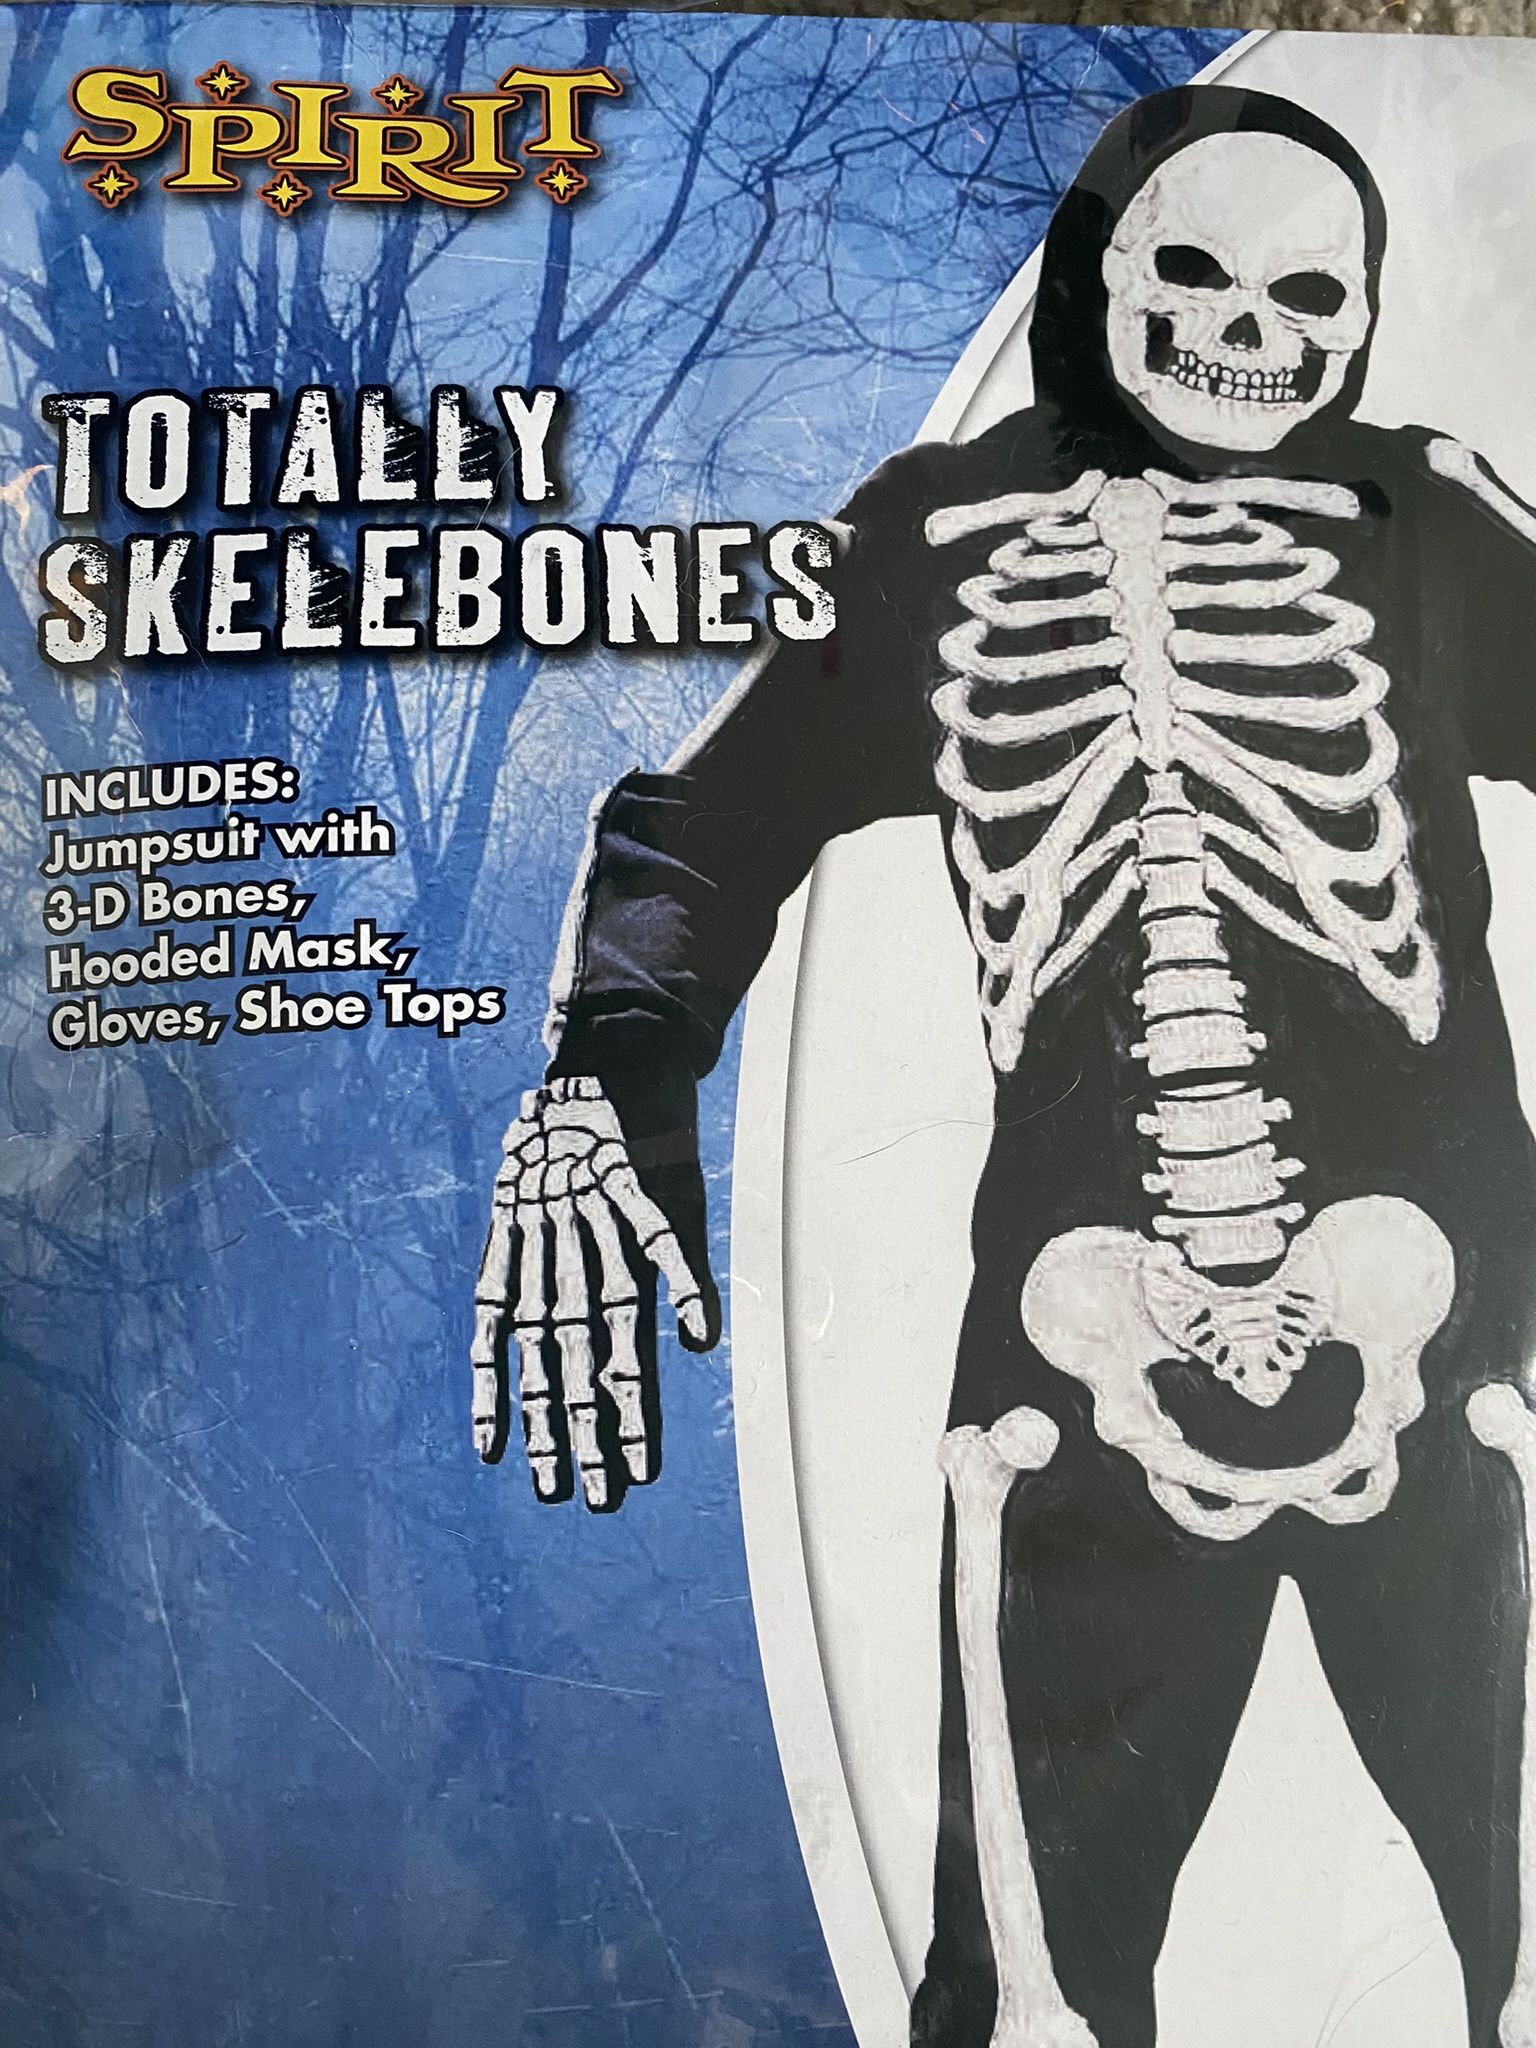 Totally Skelebones Costume (Kids Size Large 12-14)